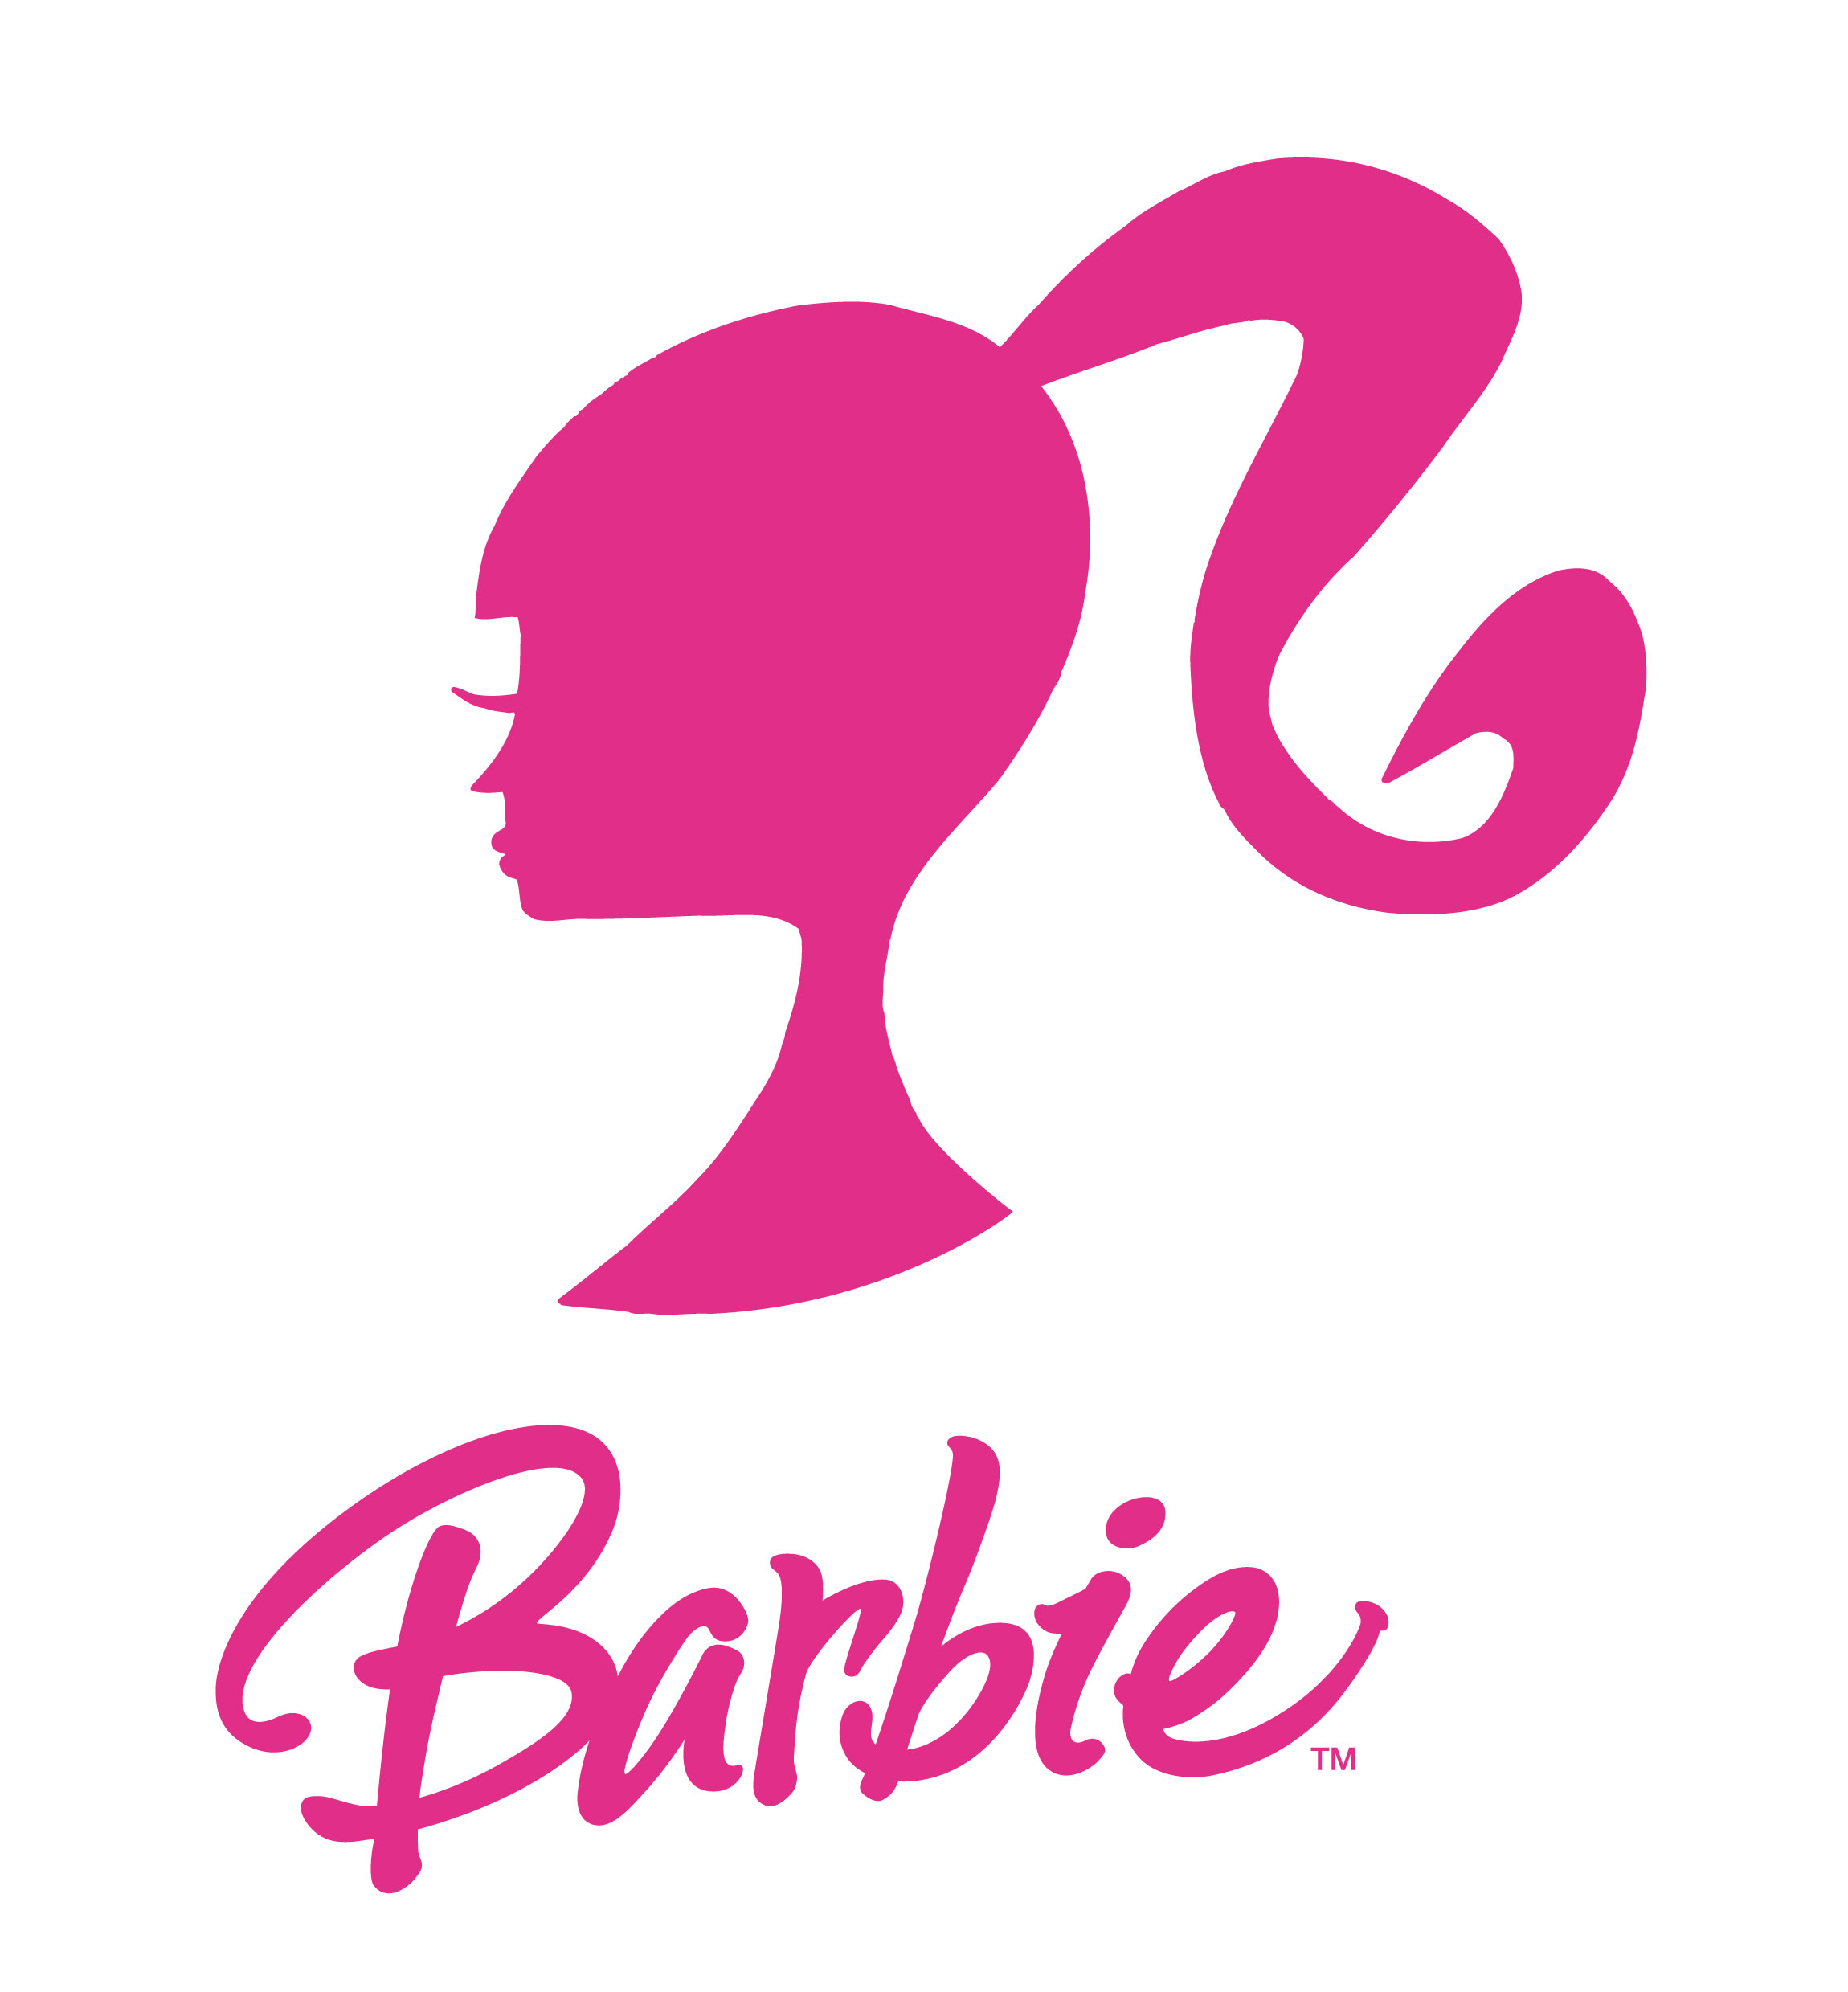 barbie logo Logospikecom Famous and Free Vector Logos